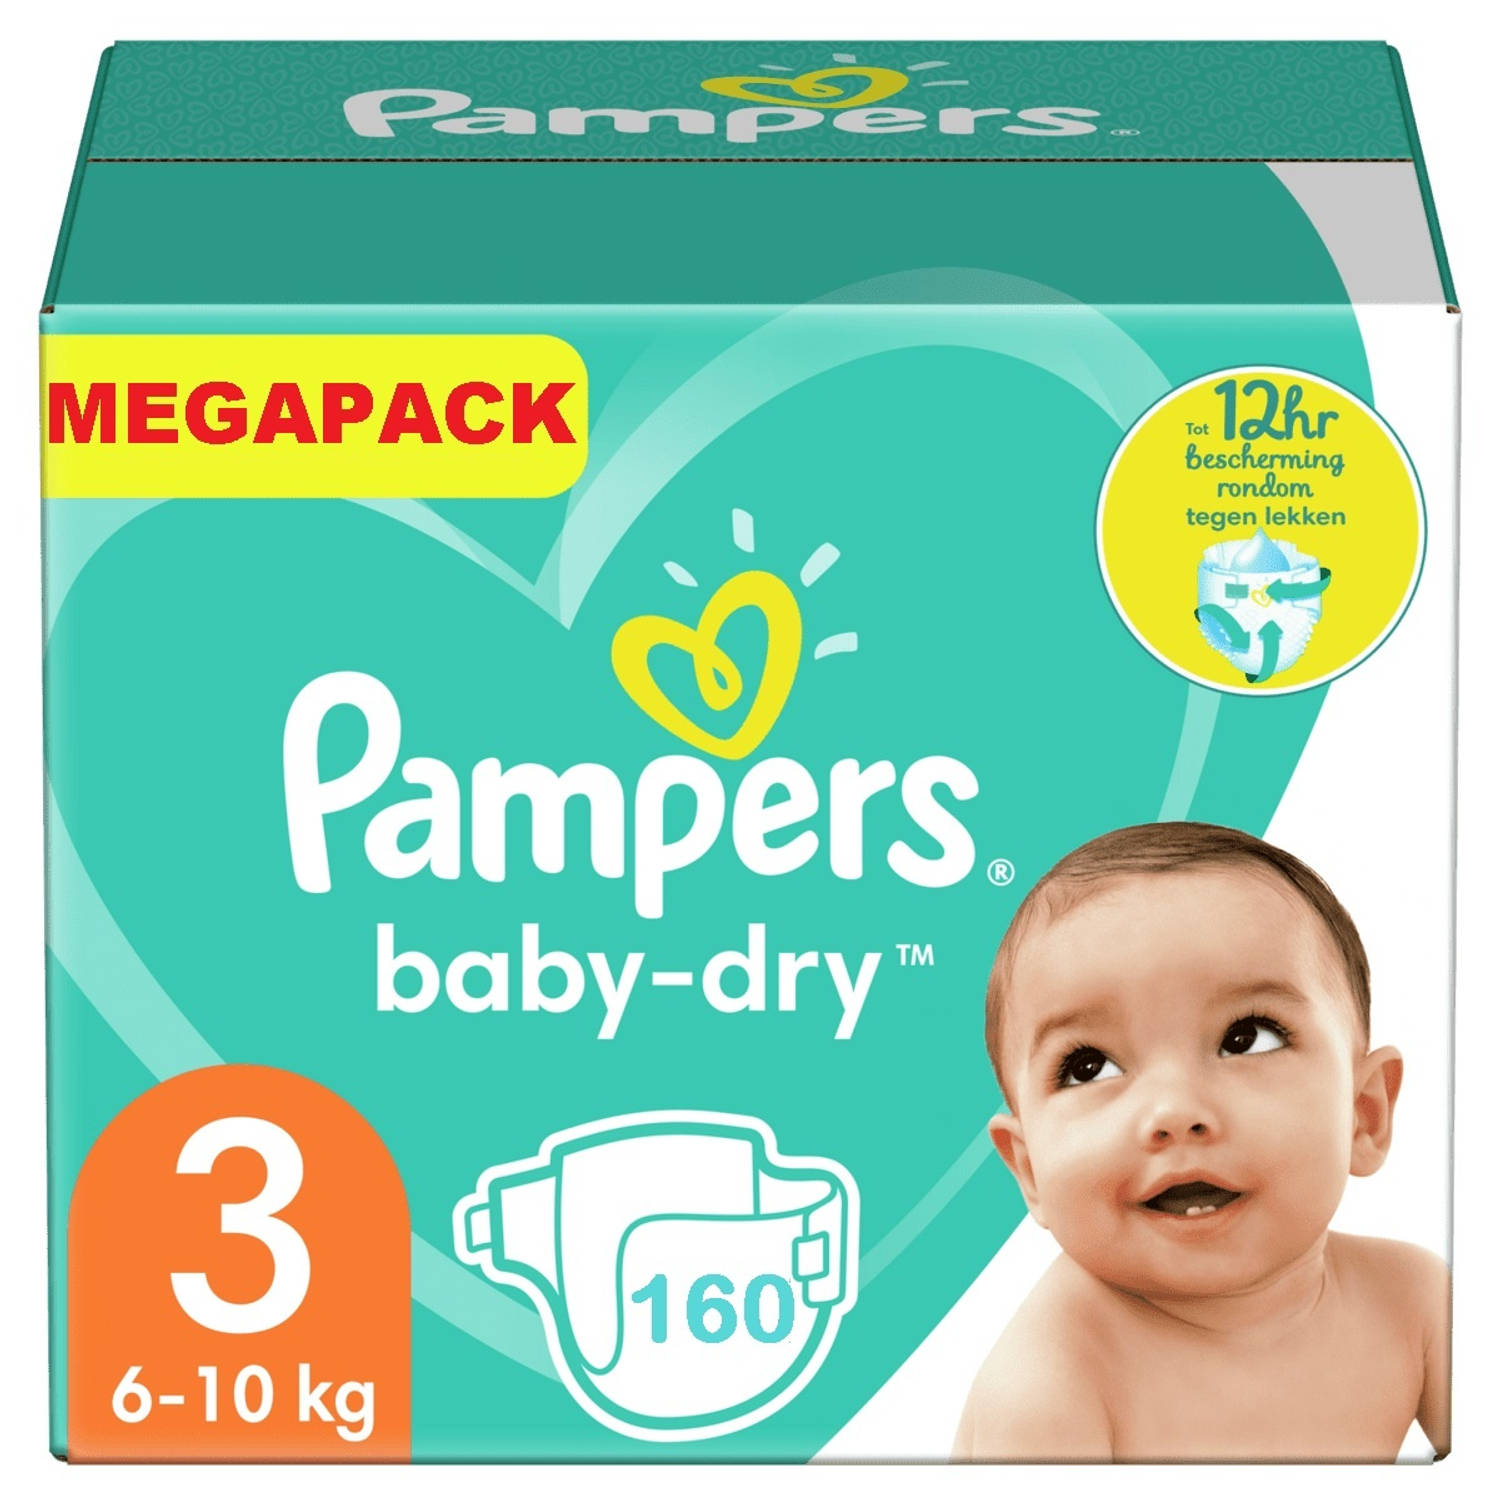 Pampers baby-dry maat 3 - BIG PACK - 160 stuks - 6 tot 10 kg- 12h bescherming